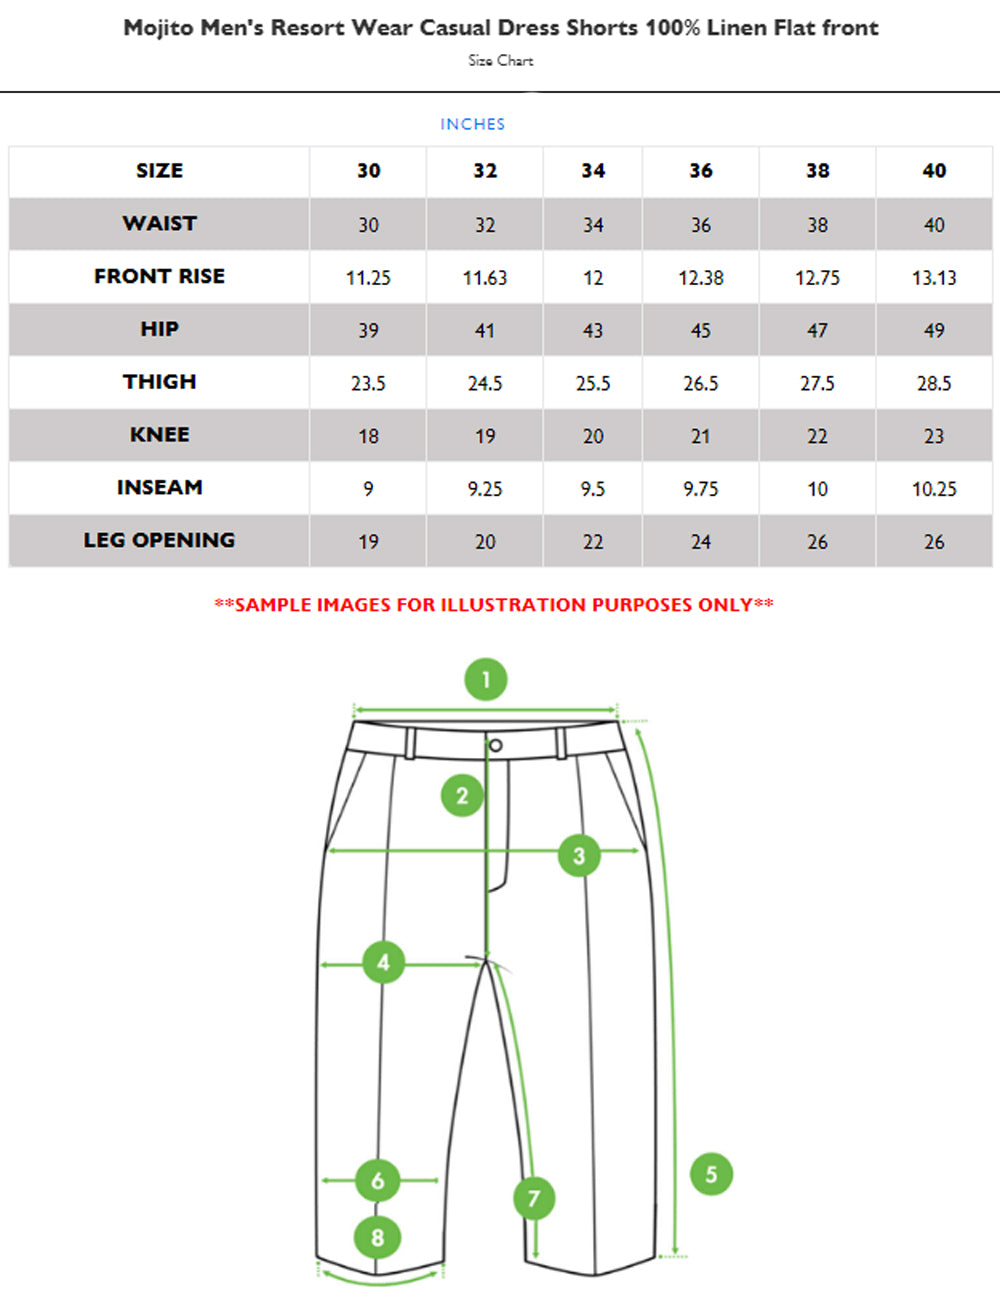 Mojito Men's Resort Wear Casual Dress Shorts 100% Linen Flat front